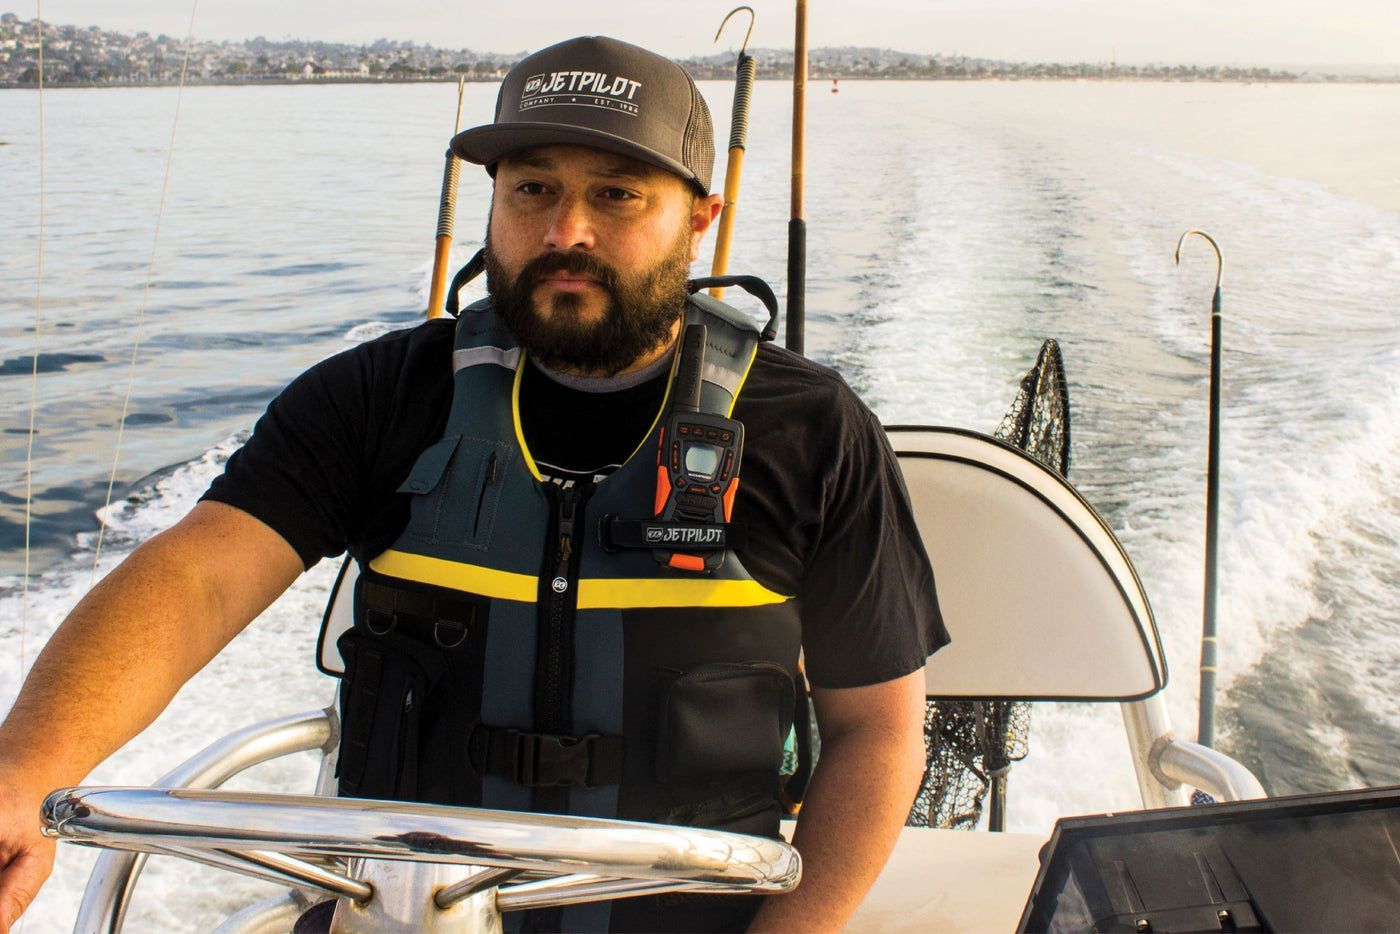 Boat driver wearing the Jetpilot L.R.E. Helmsman life vest.